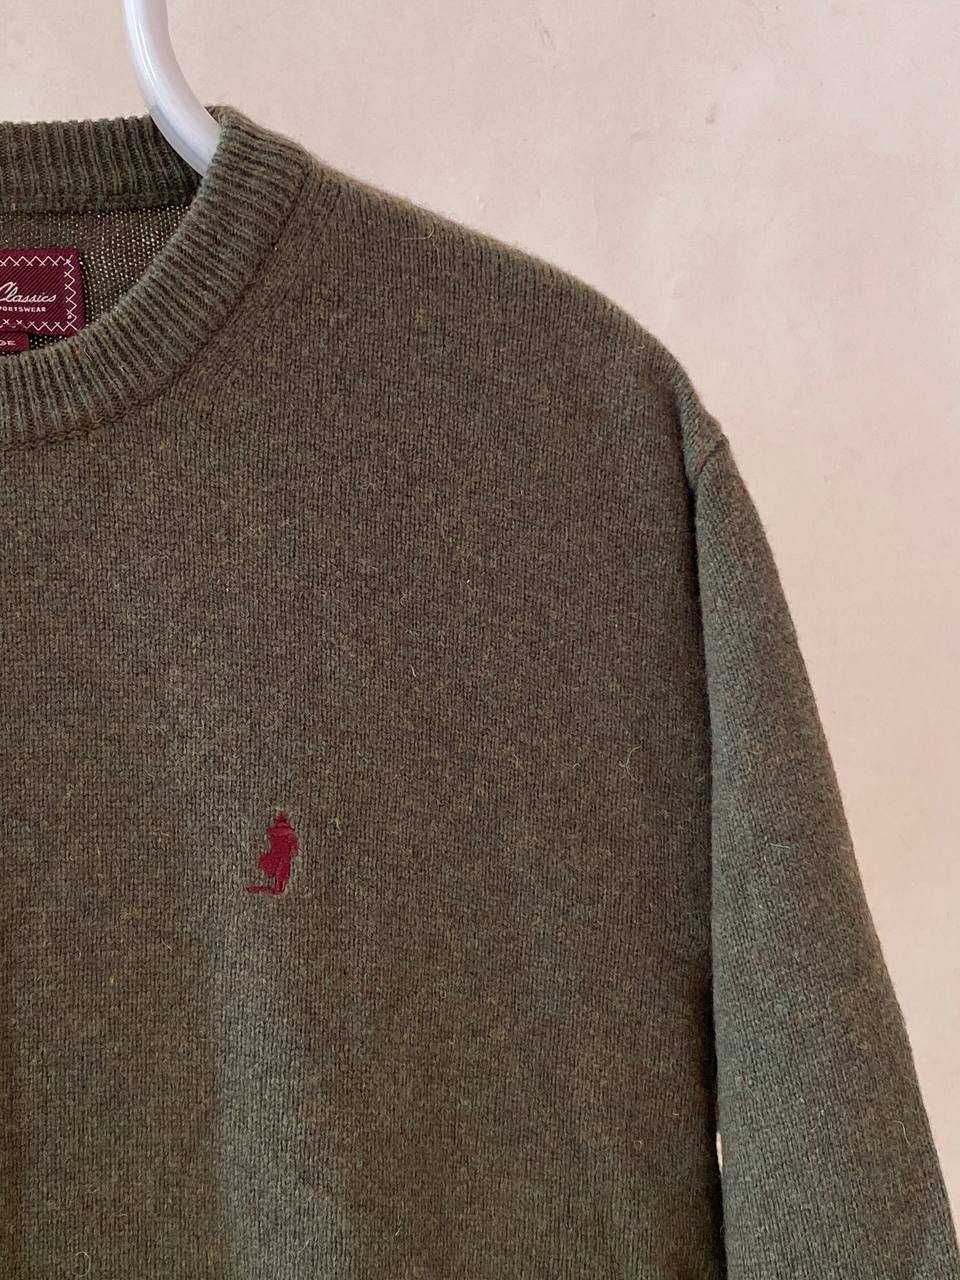 Marlboro Classics sweter męski haft logo wełniany wool